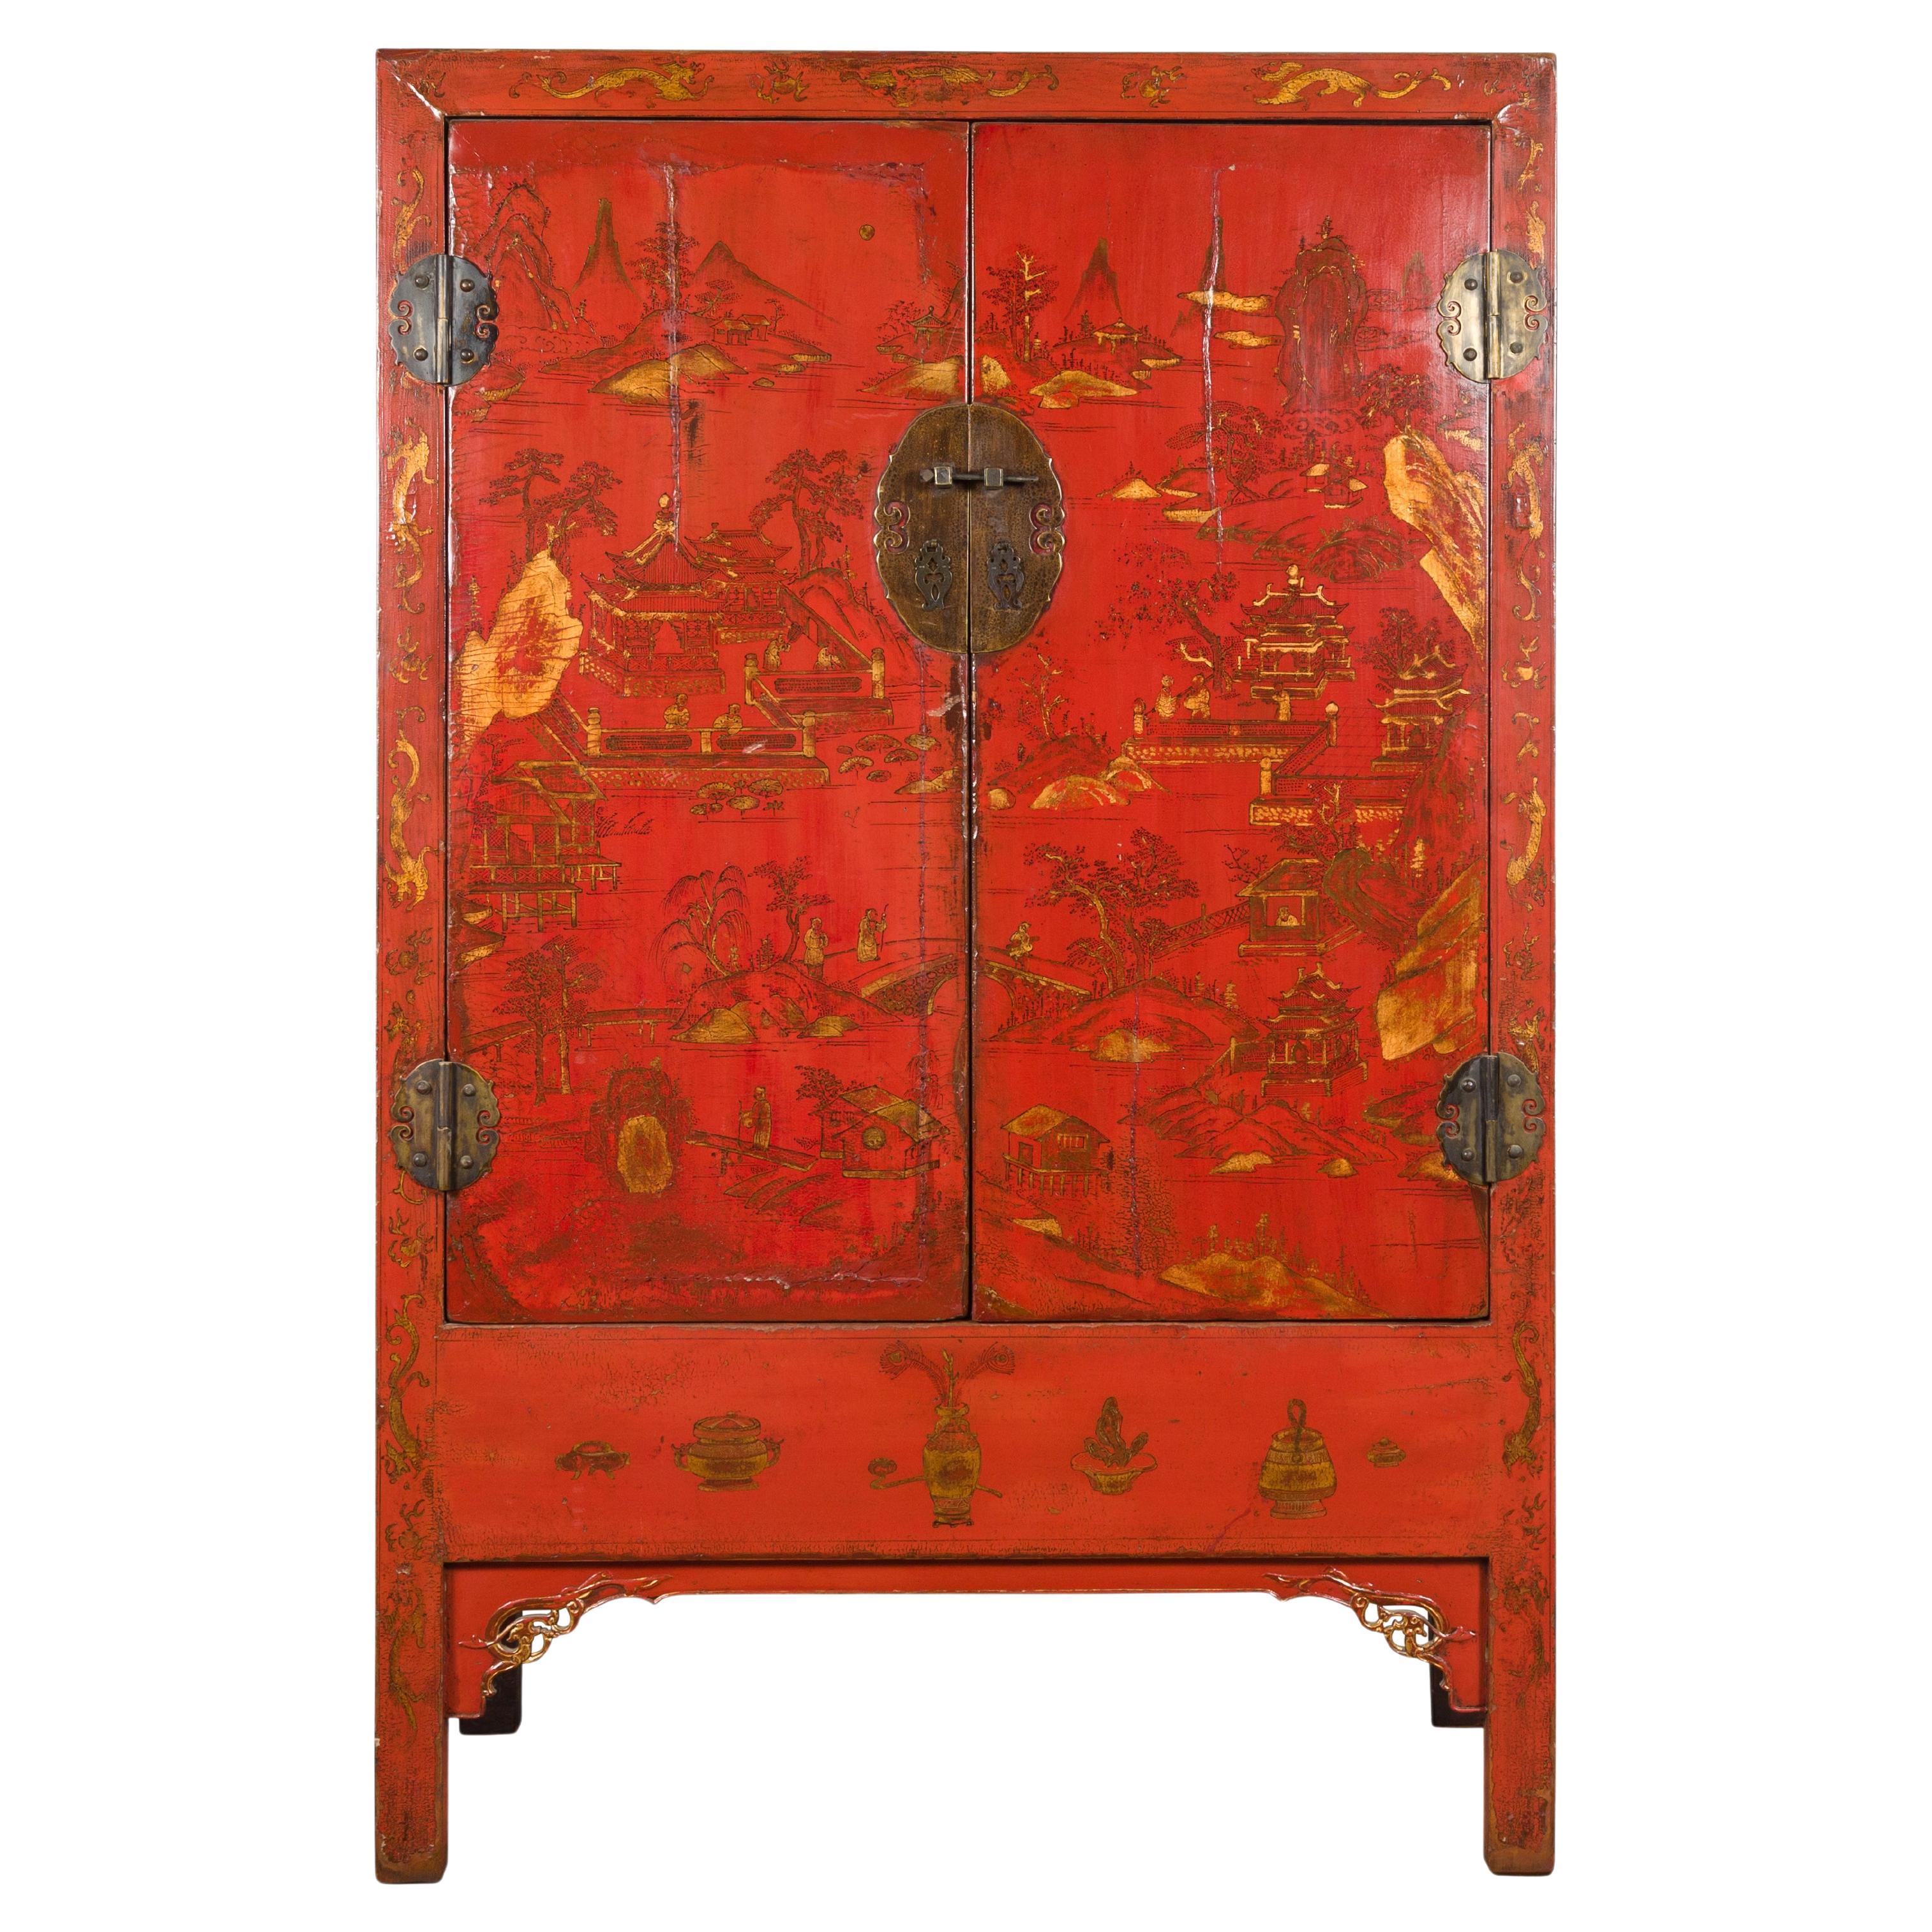 Chinesische Qing-Dynastie 19. Jahrhundert handbemaltes Kabinett mit original rotem Lack